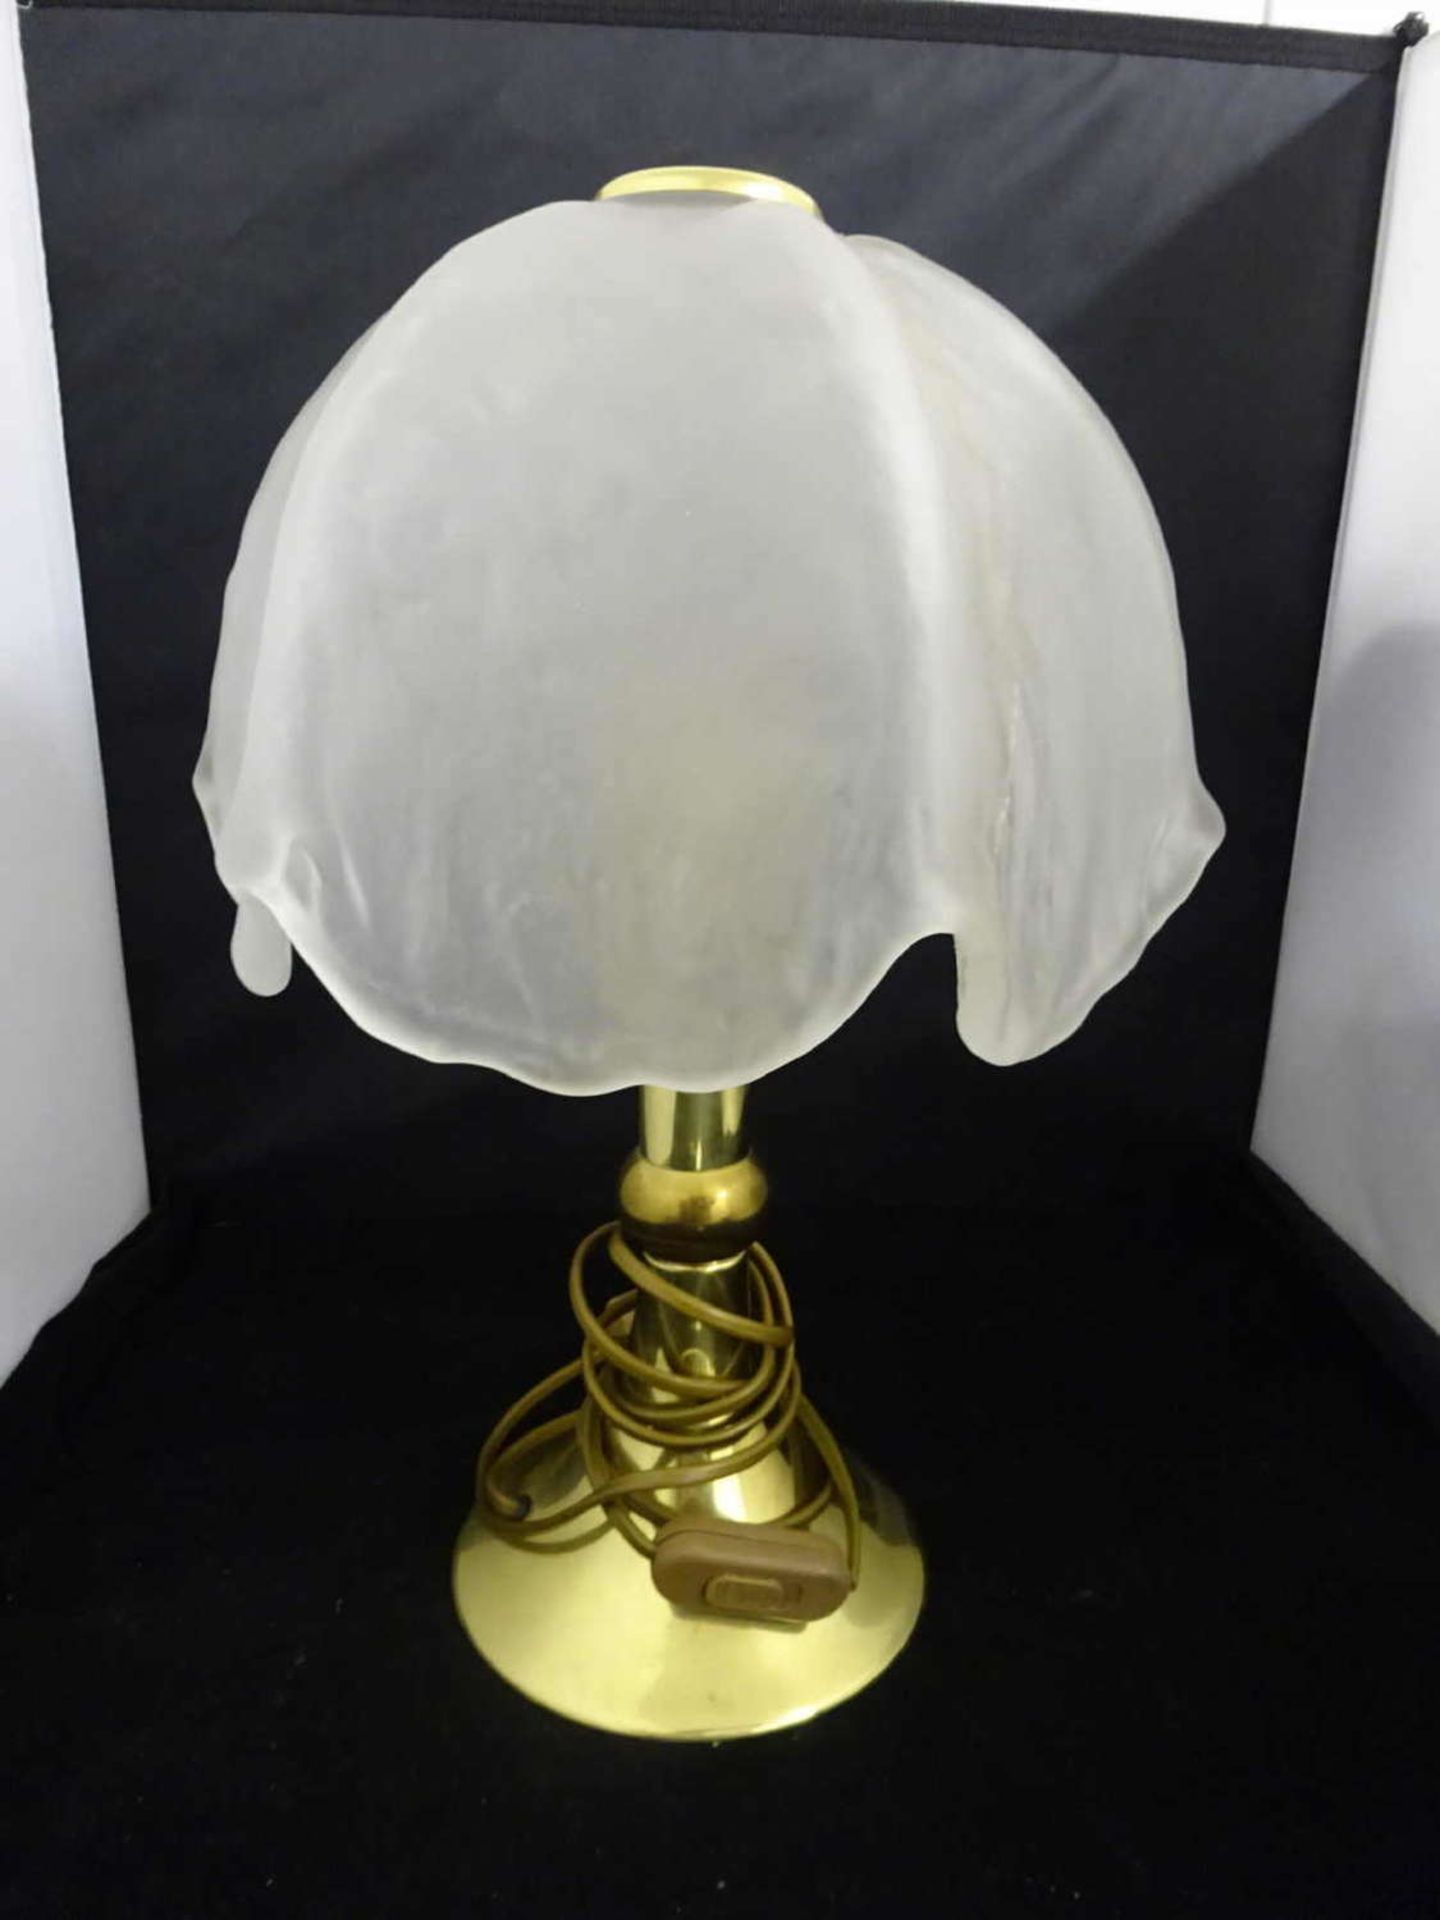 schwere Tischlampe mit Messingfuß und Glasschirm. Höhe ca. 40 cmheavy table lamp with brass base and